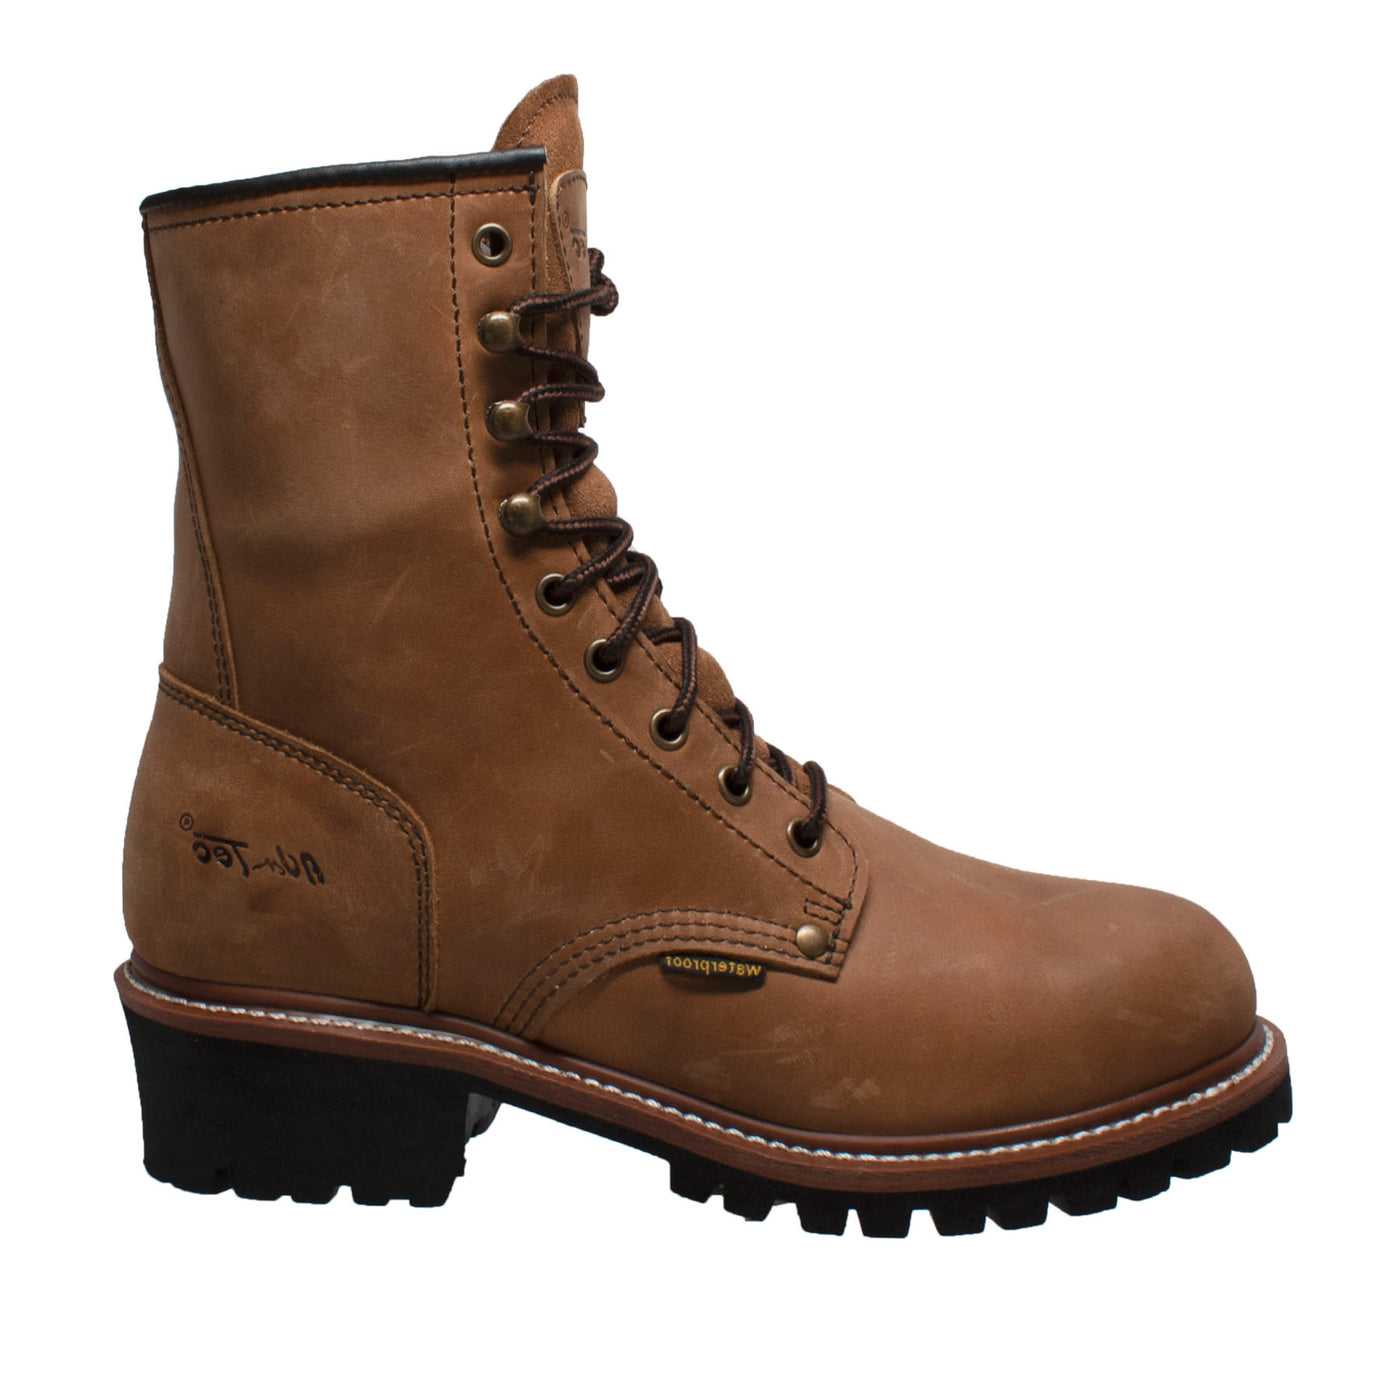 Men's 9" Waterproof Logger Brown - 1427WP - Shop Genuine Leather men & women's boots online | AdTecFootWear